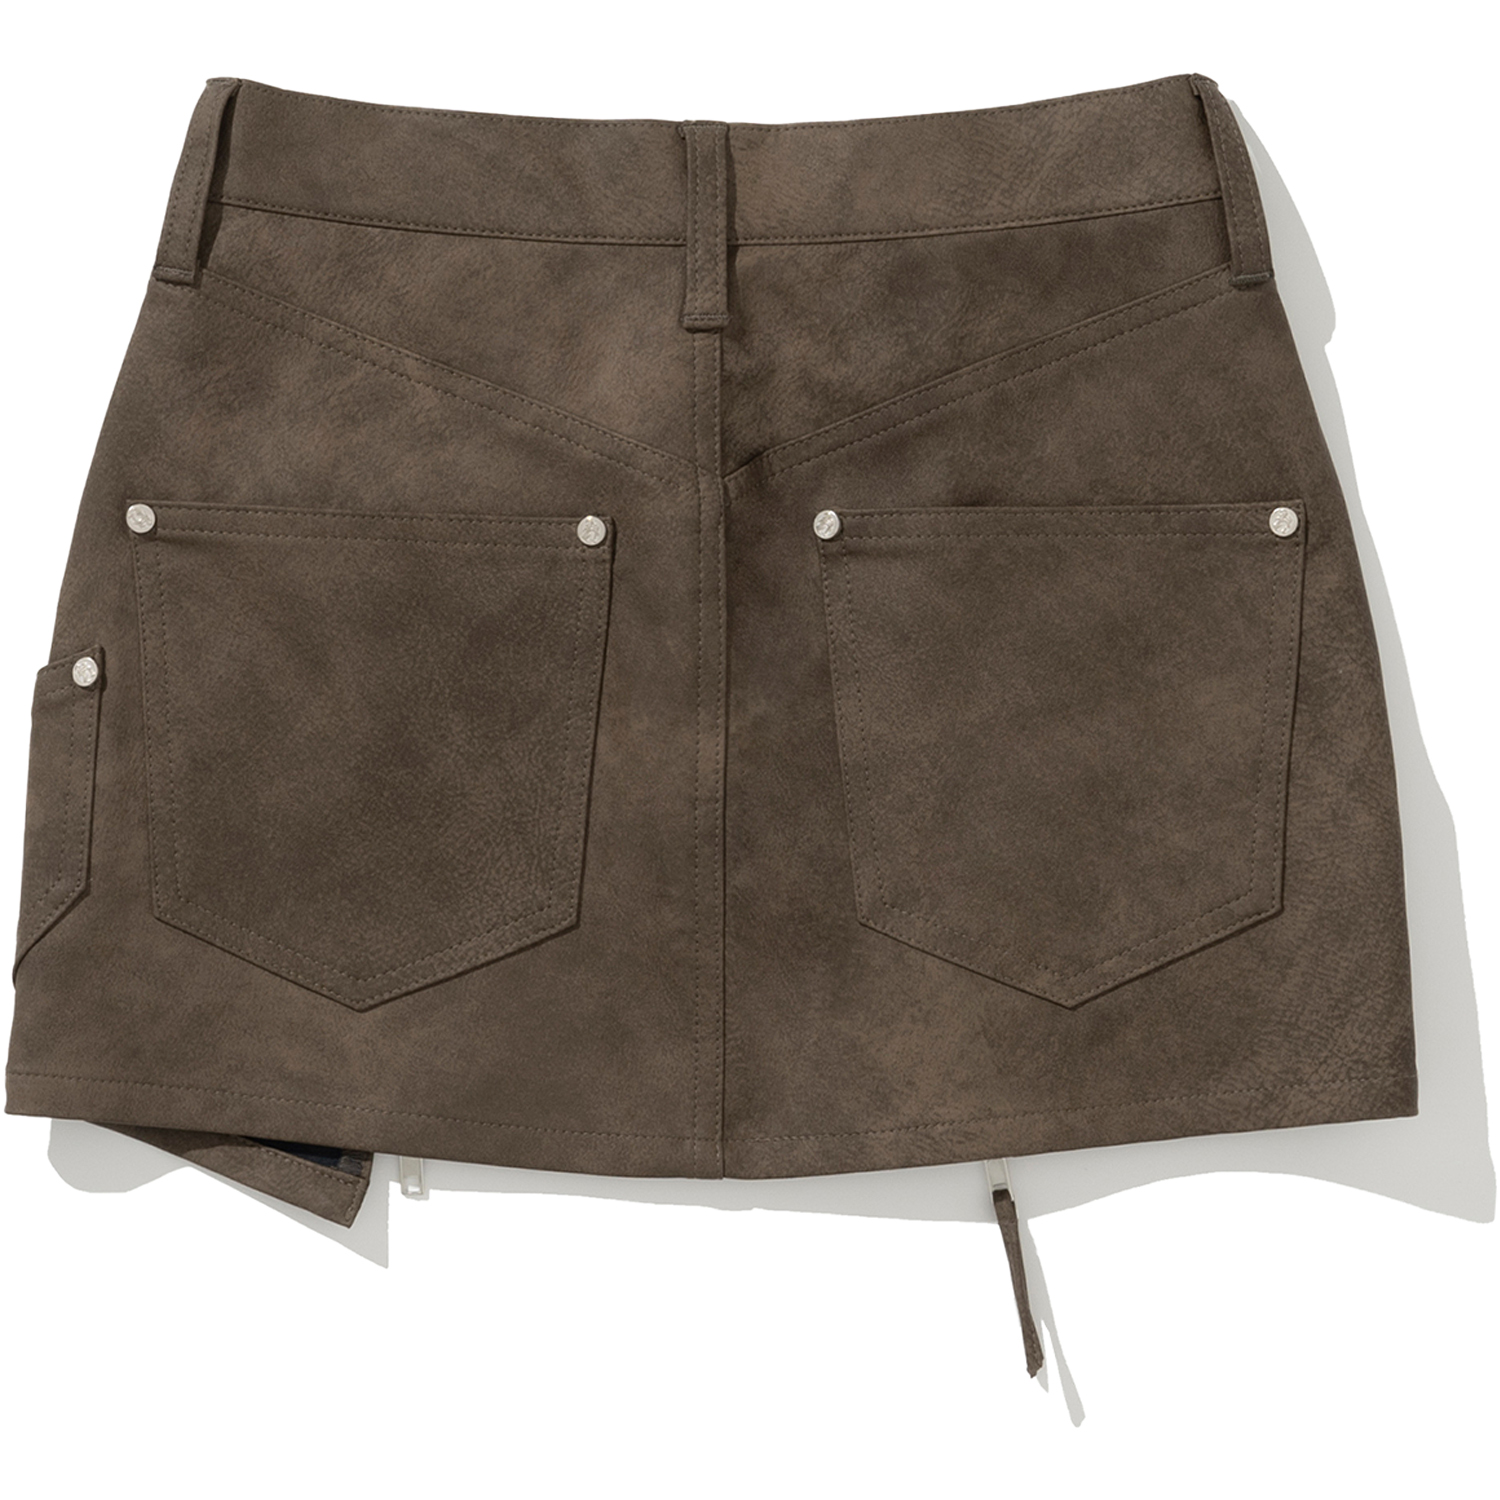 W Vintage Leather Zipper Mini Skirt - Brown,NOT4NERD